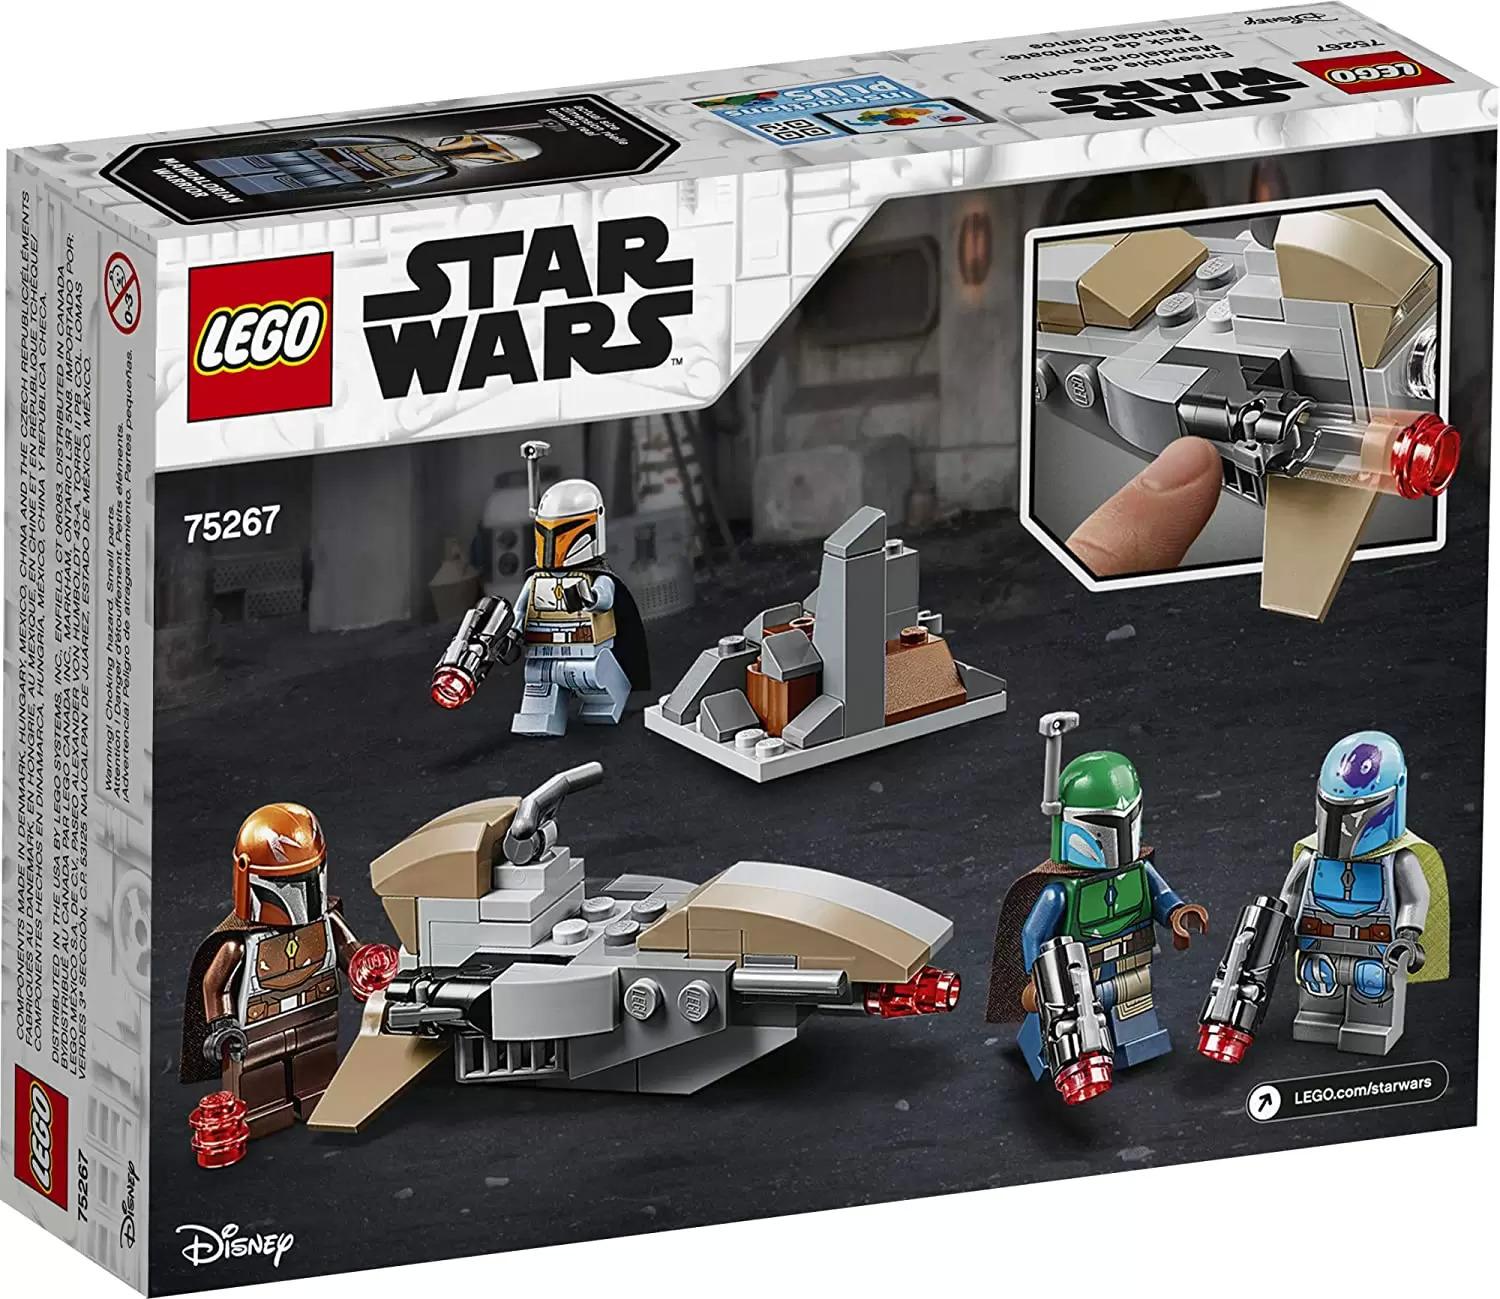 102-Piece LEGO Star Wars Mandalorian Battle Pack for $10.99